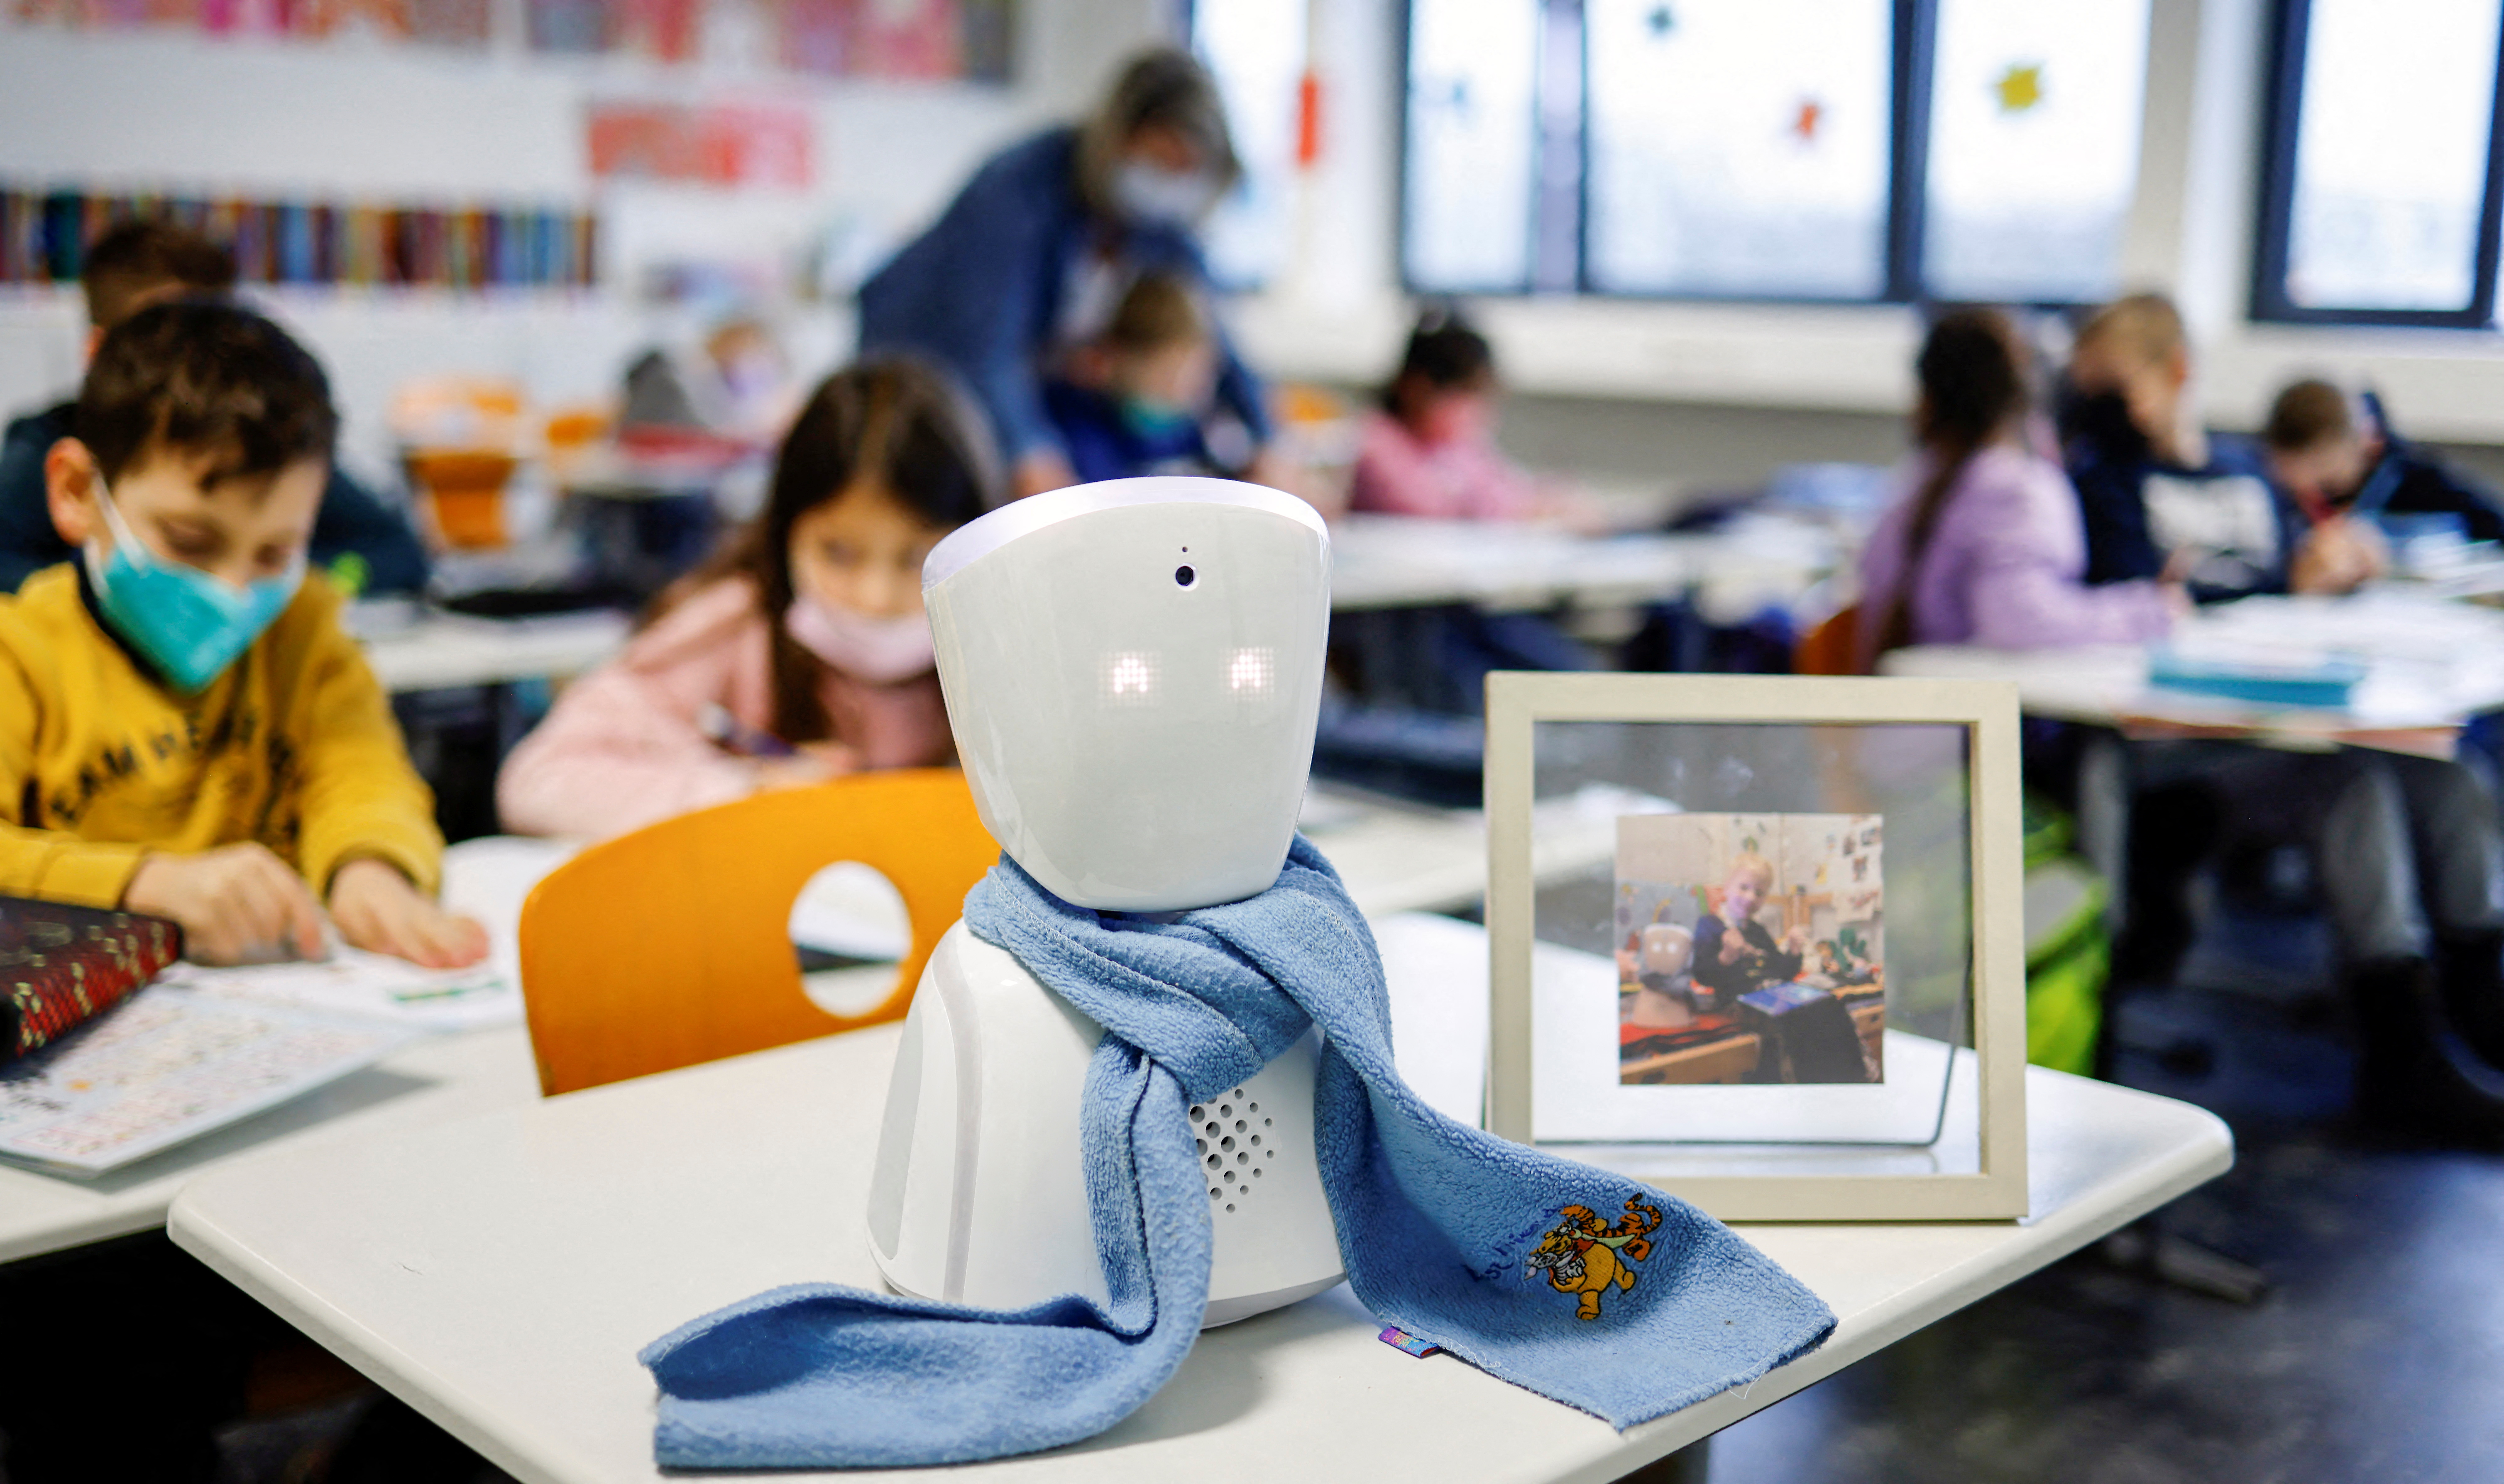 Robot avatar for school lessons